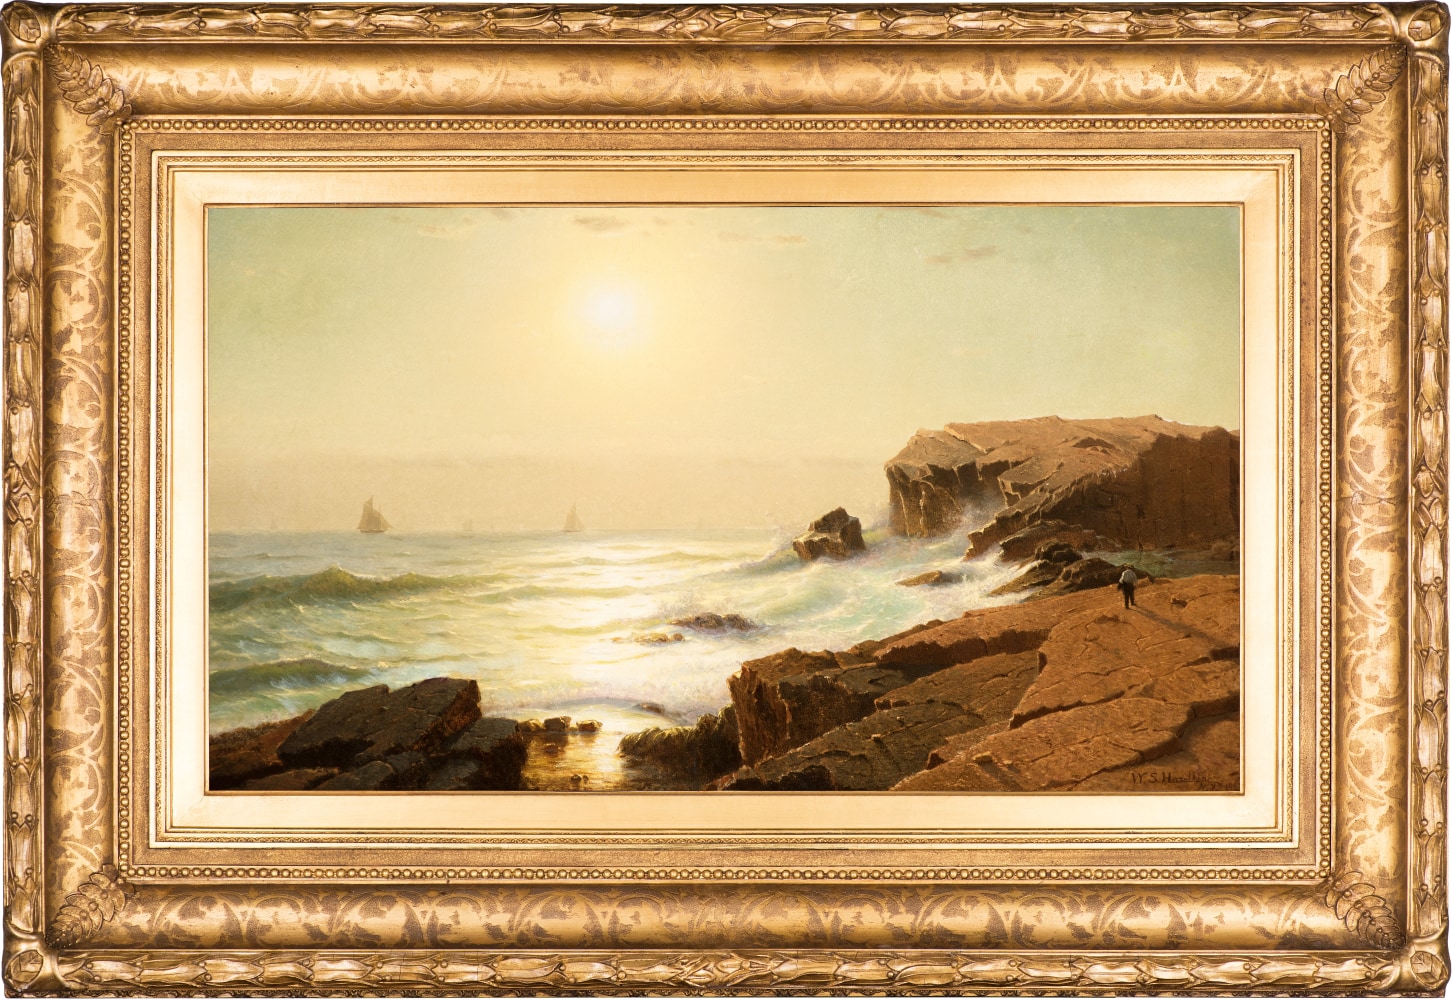 William Stanley Haseltine (1835–1900) - Artworks - Godel & Co., Inc.